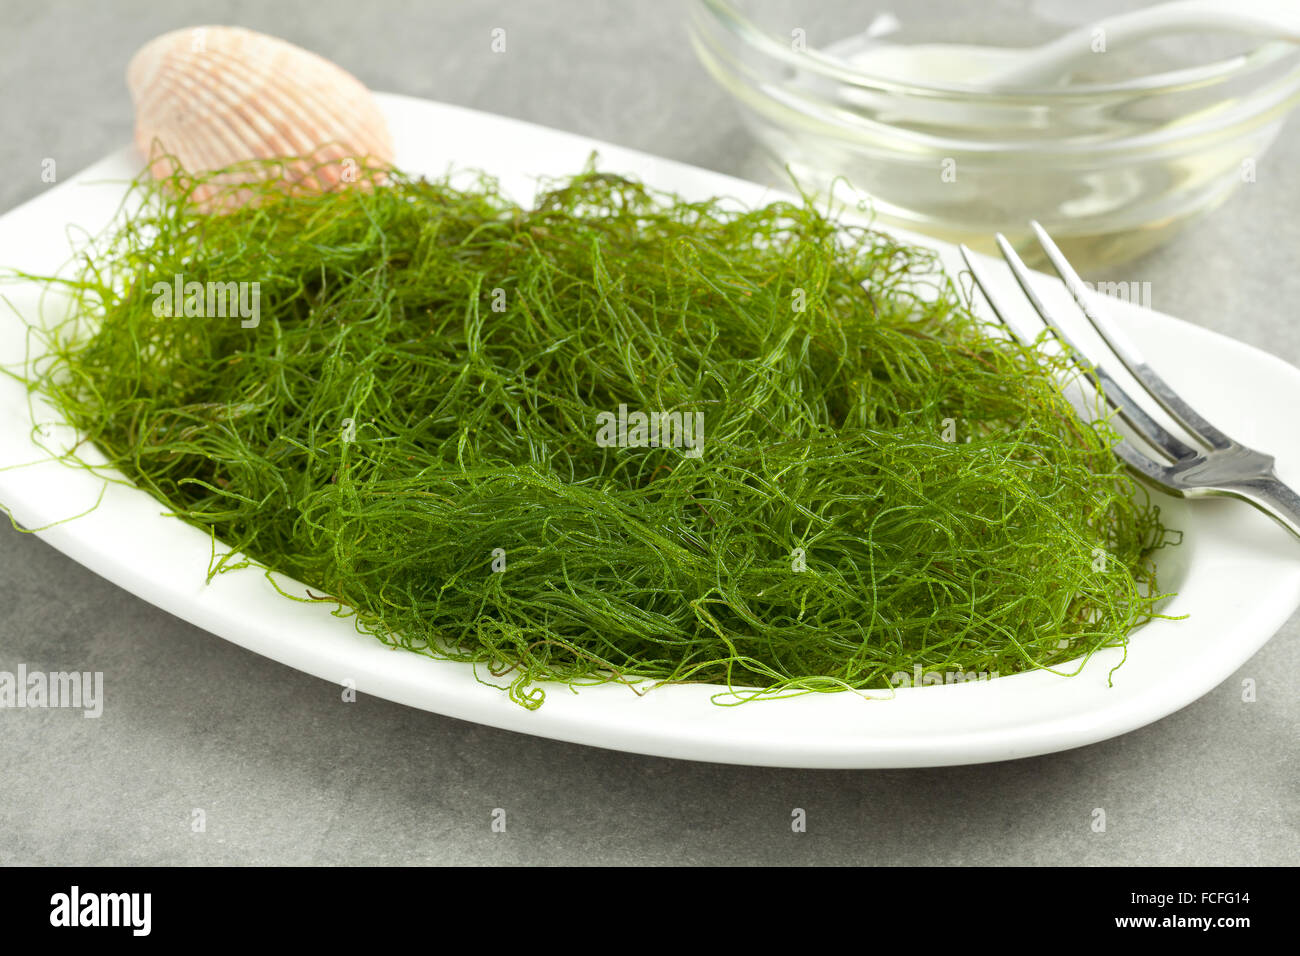 Dish with fresh filamentous green algaeas a side dish Stock Photo